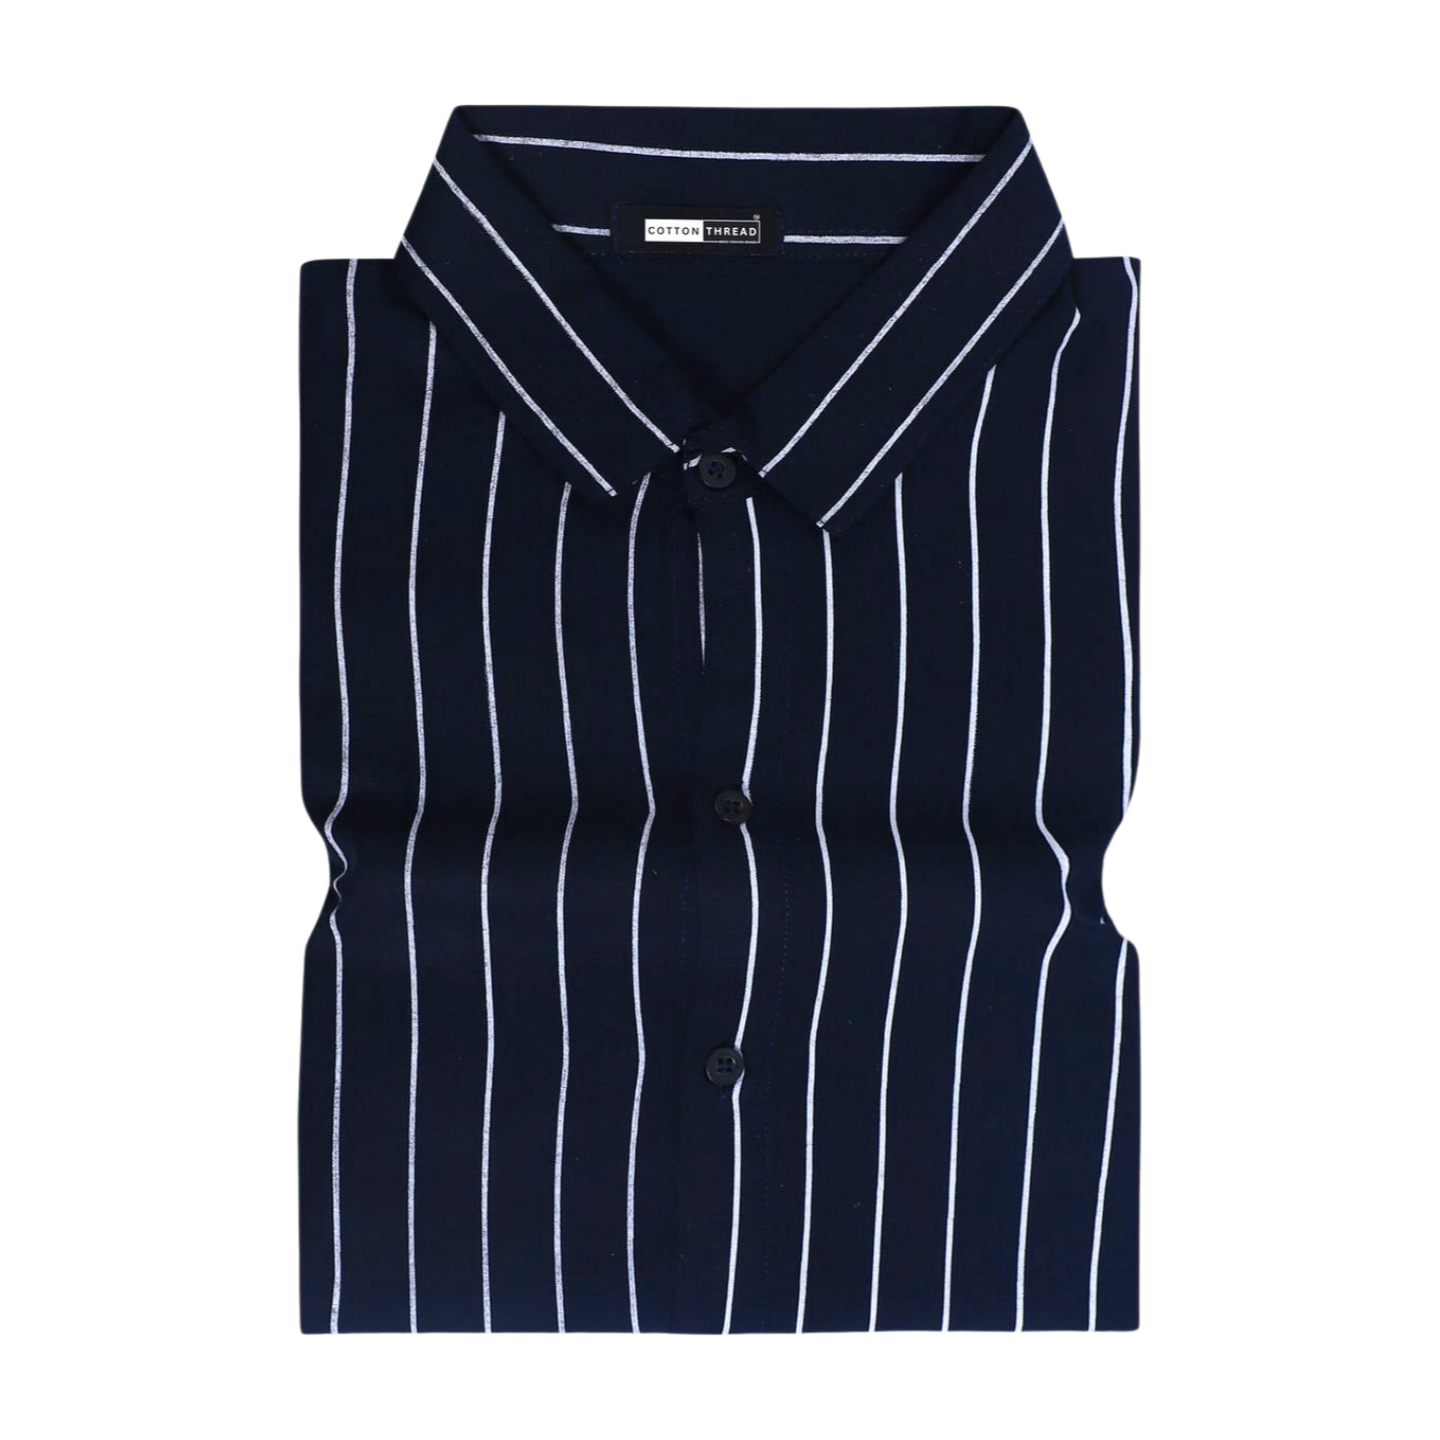 Men's Premium Formal Half Sleeve Blue Striped Shirt By Cotton Thread (STR-093)